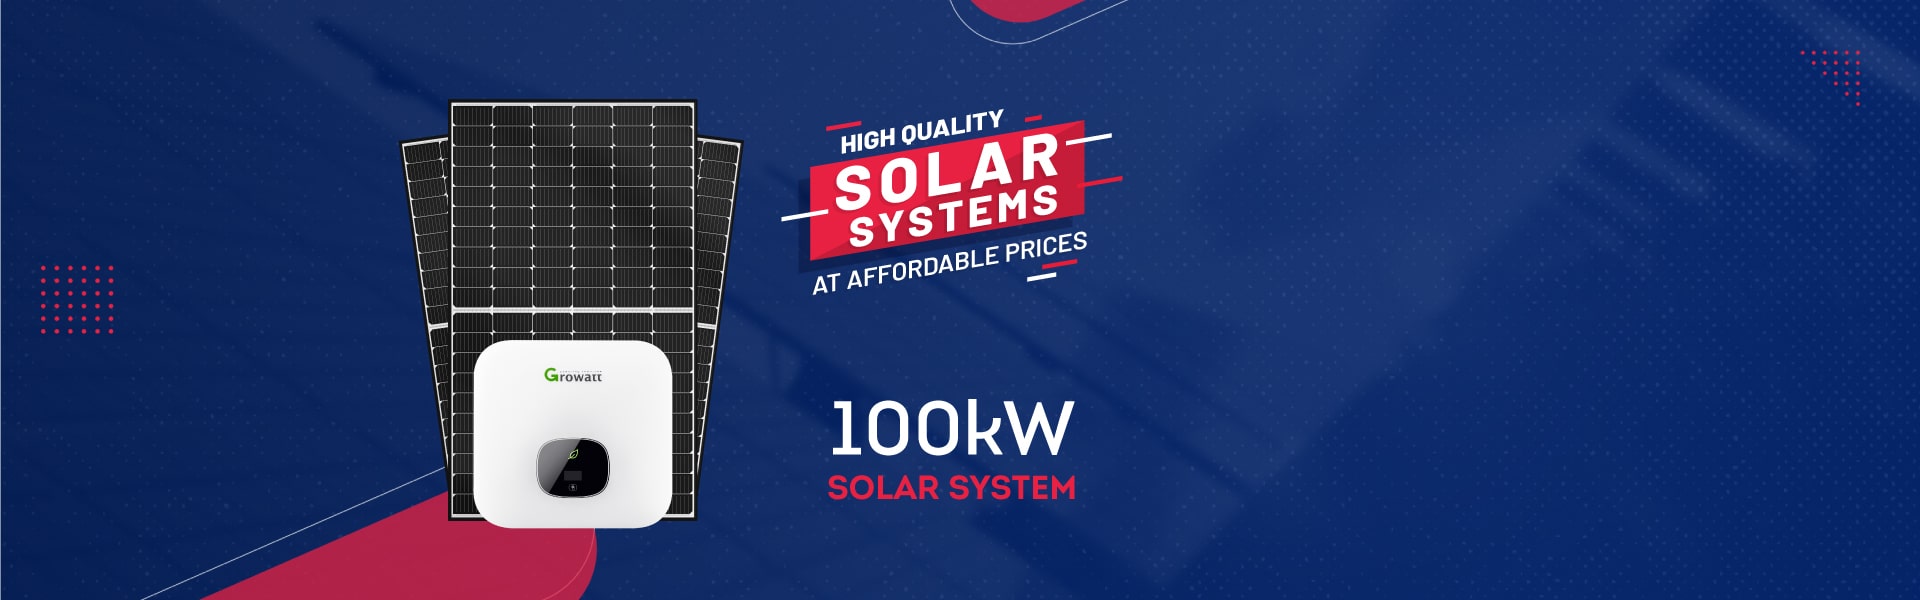 100kw solar panel system baner